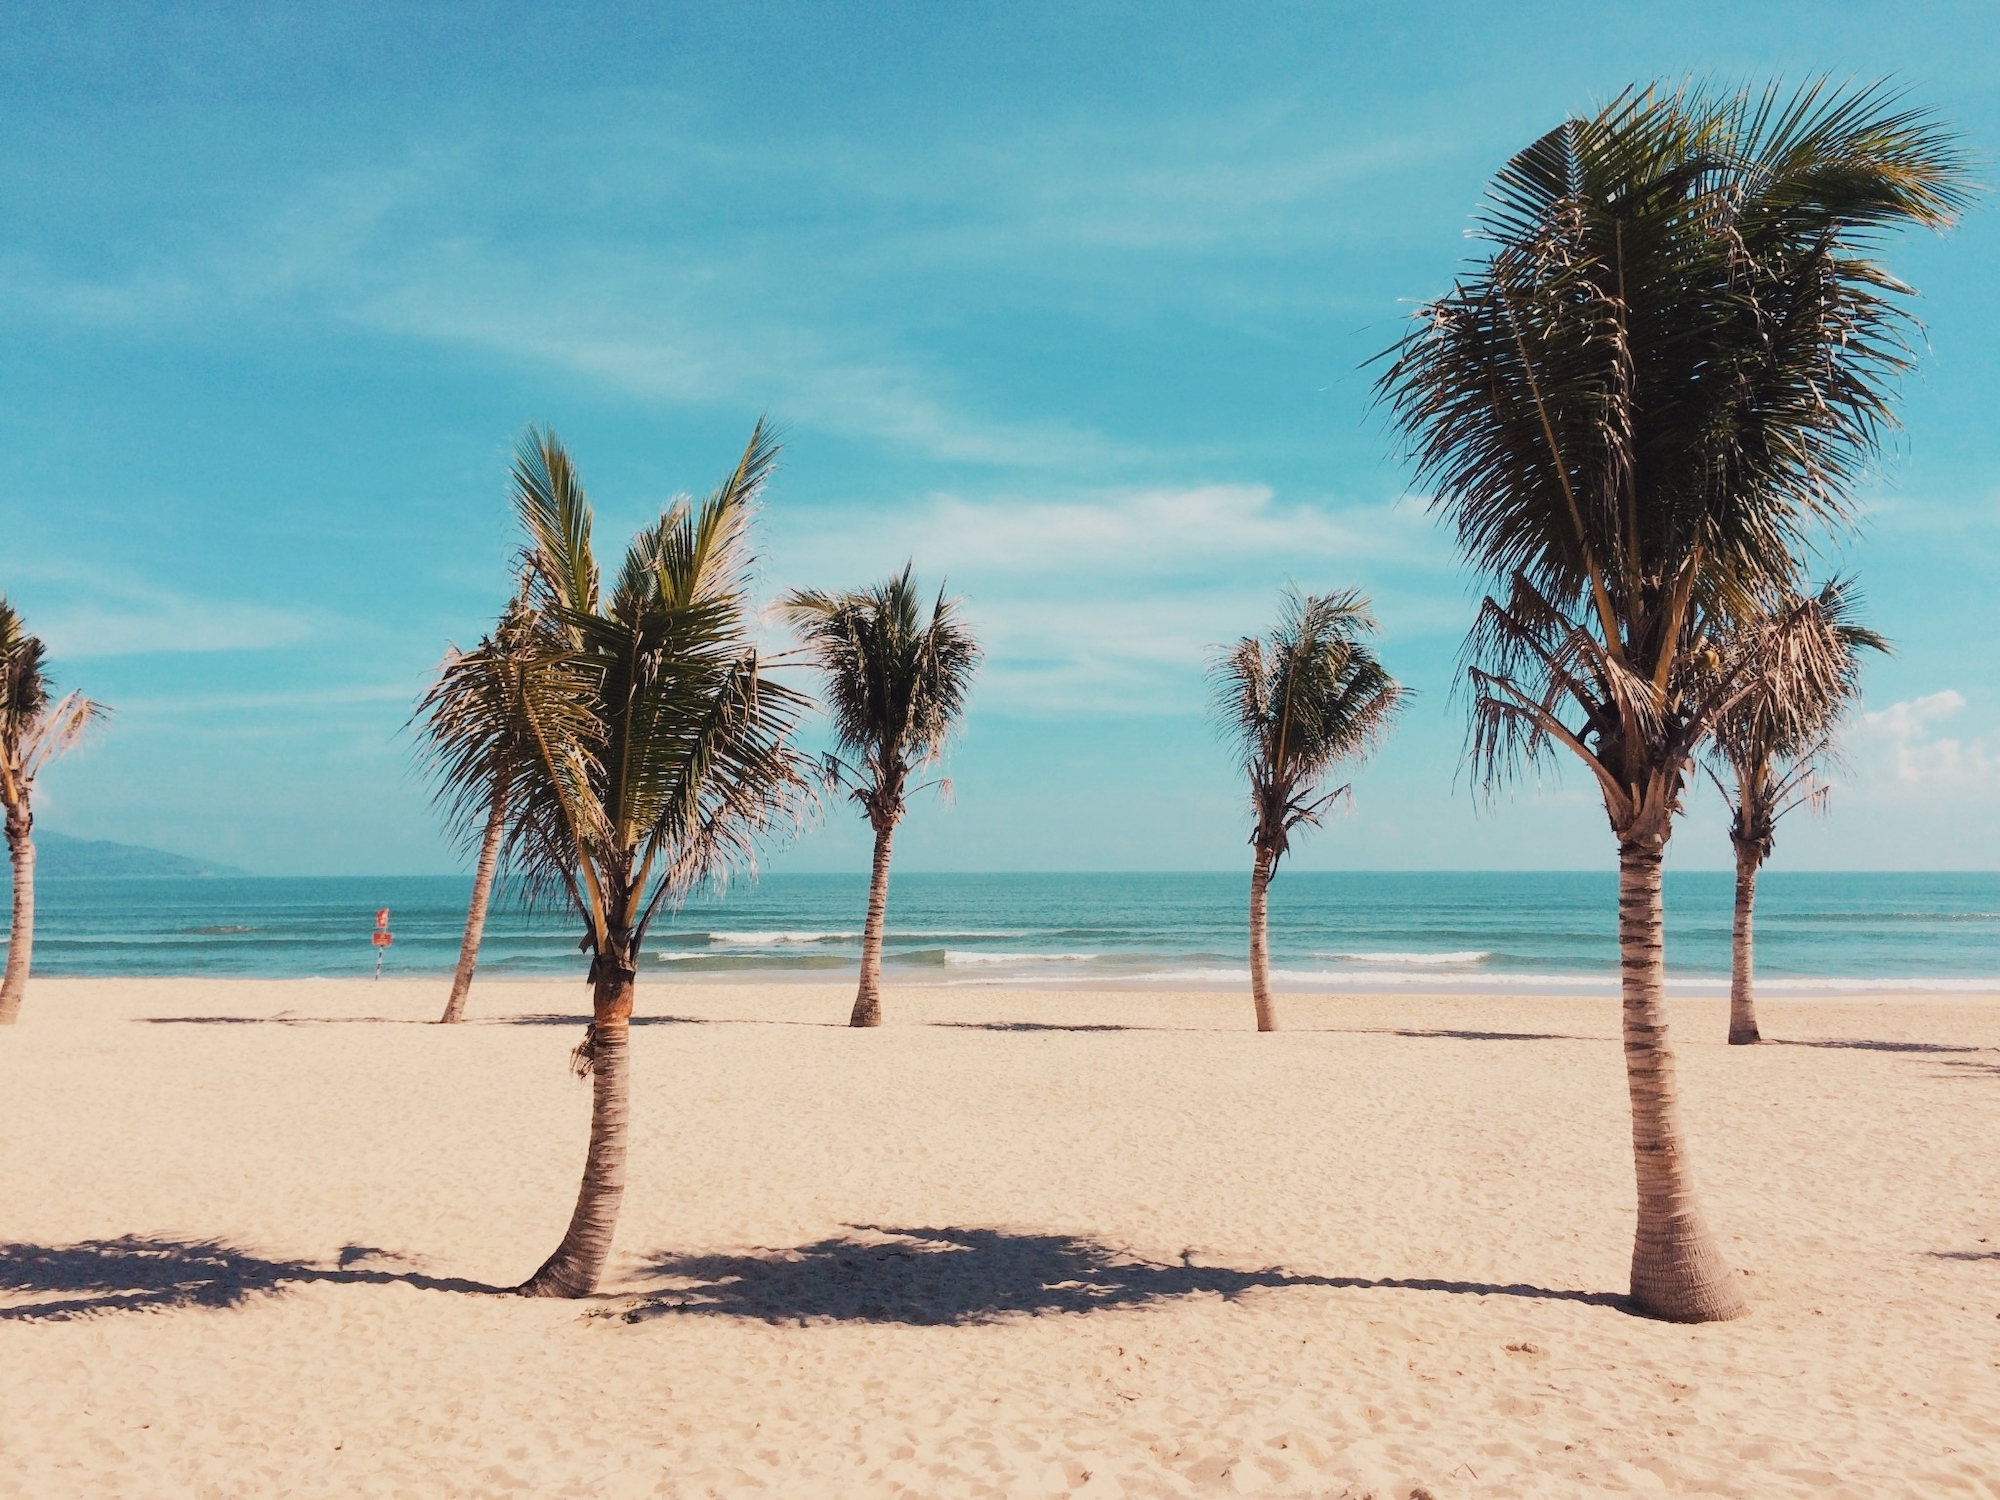 A beach in Da Nang, Vietnam with palm trees